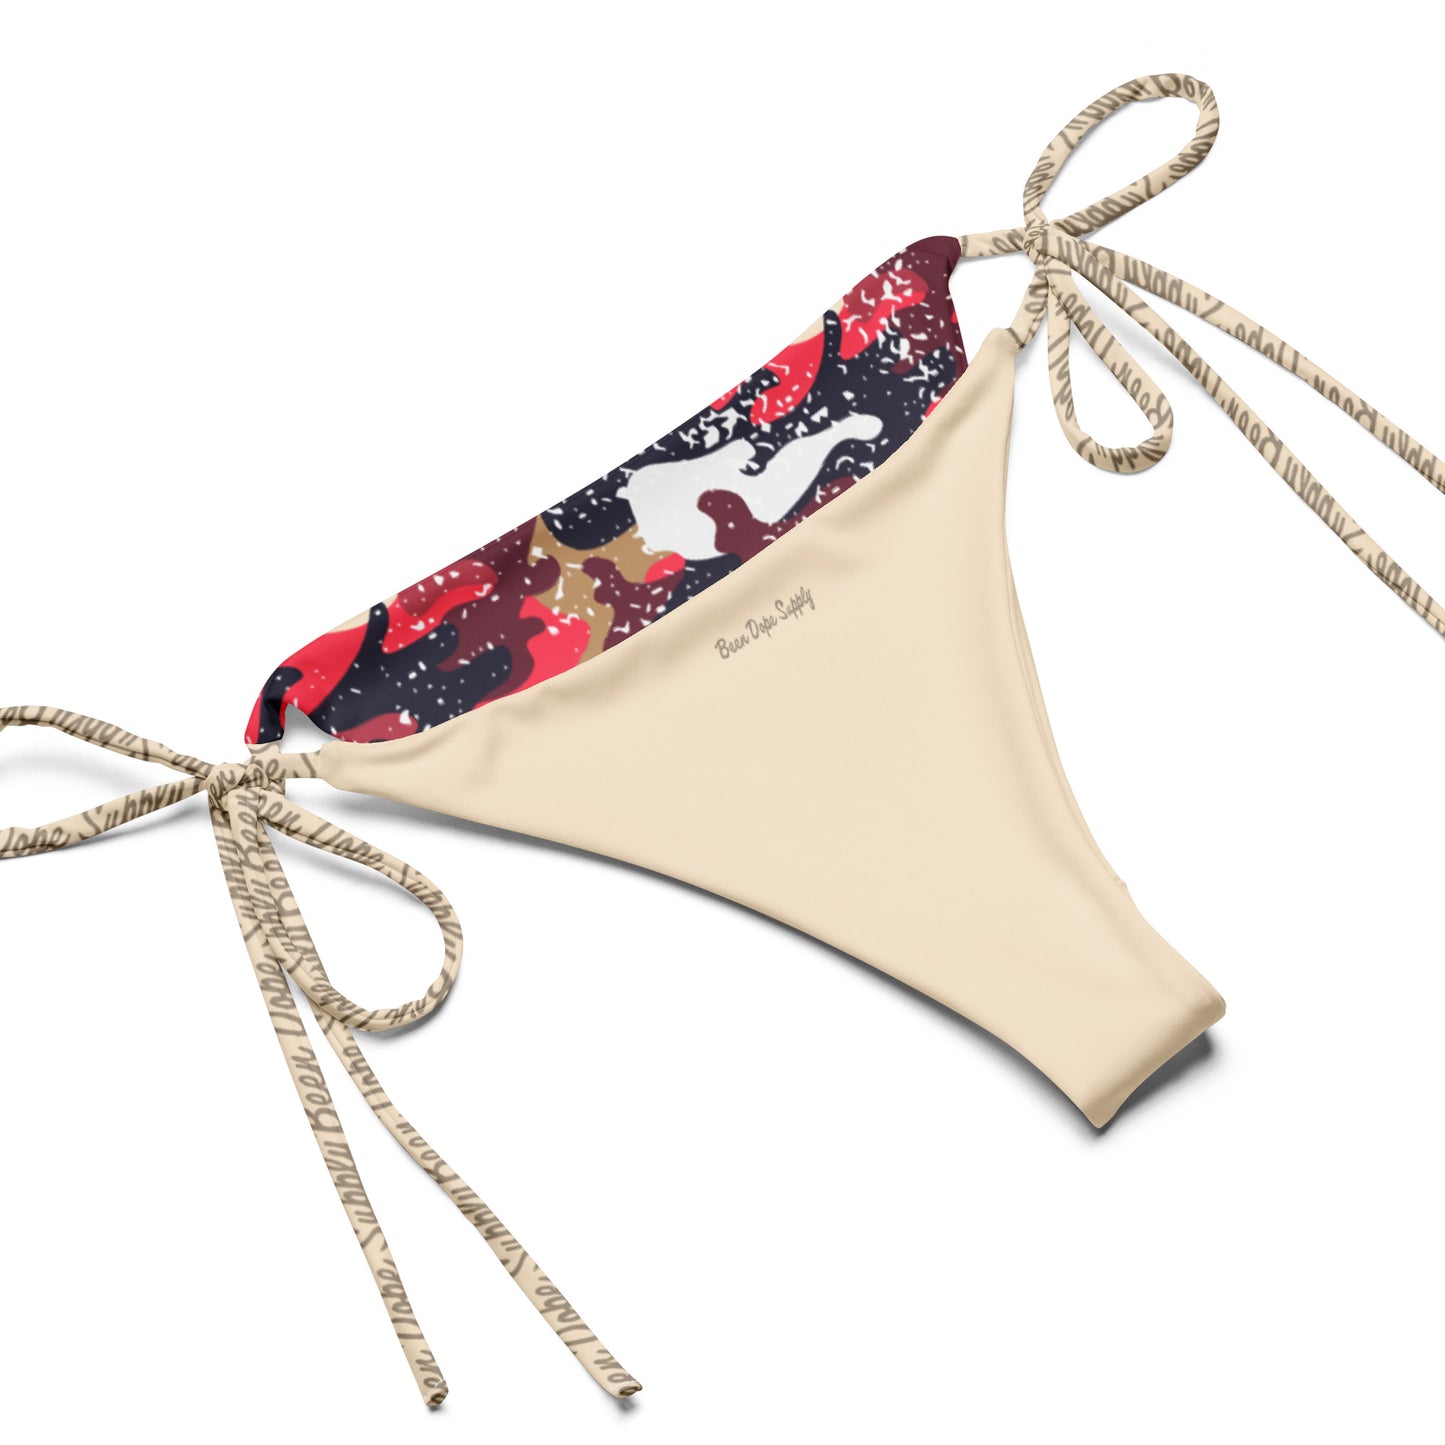 Field Day Trips | Women’s Two-Piece String Bikini Set | UPF 50+